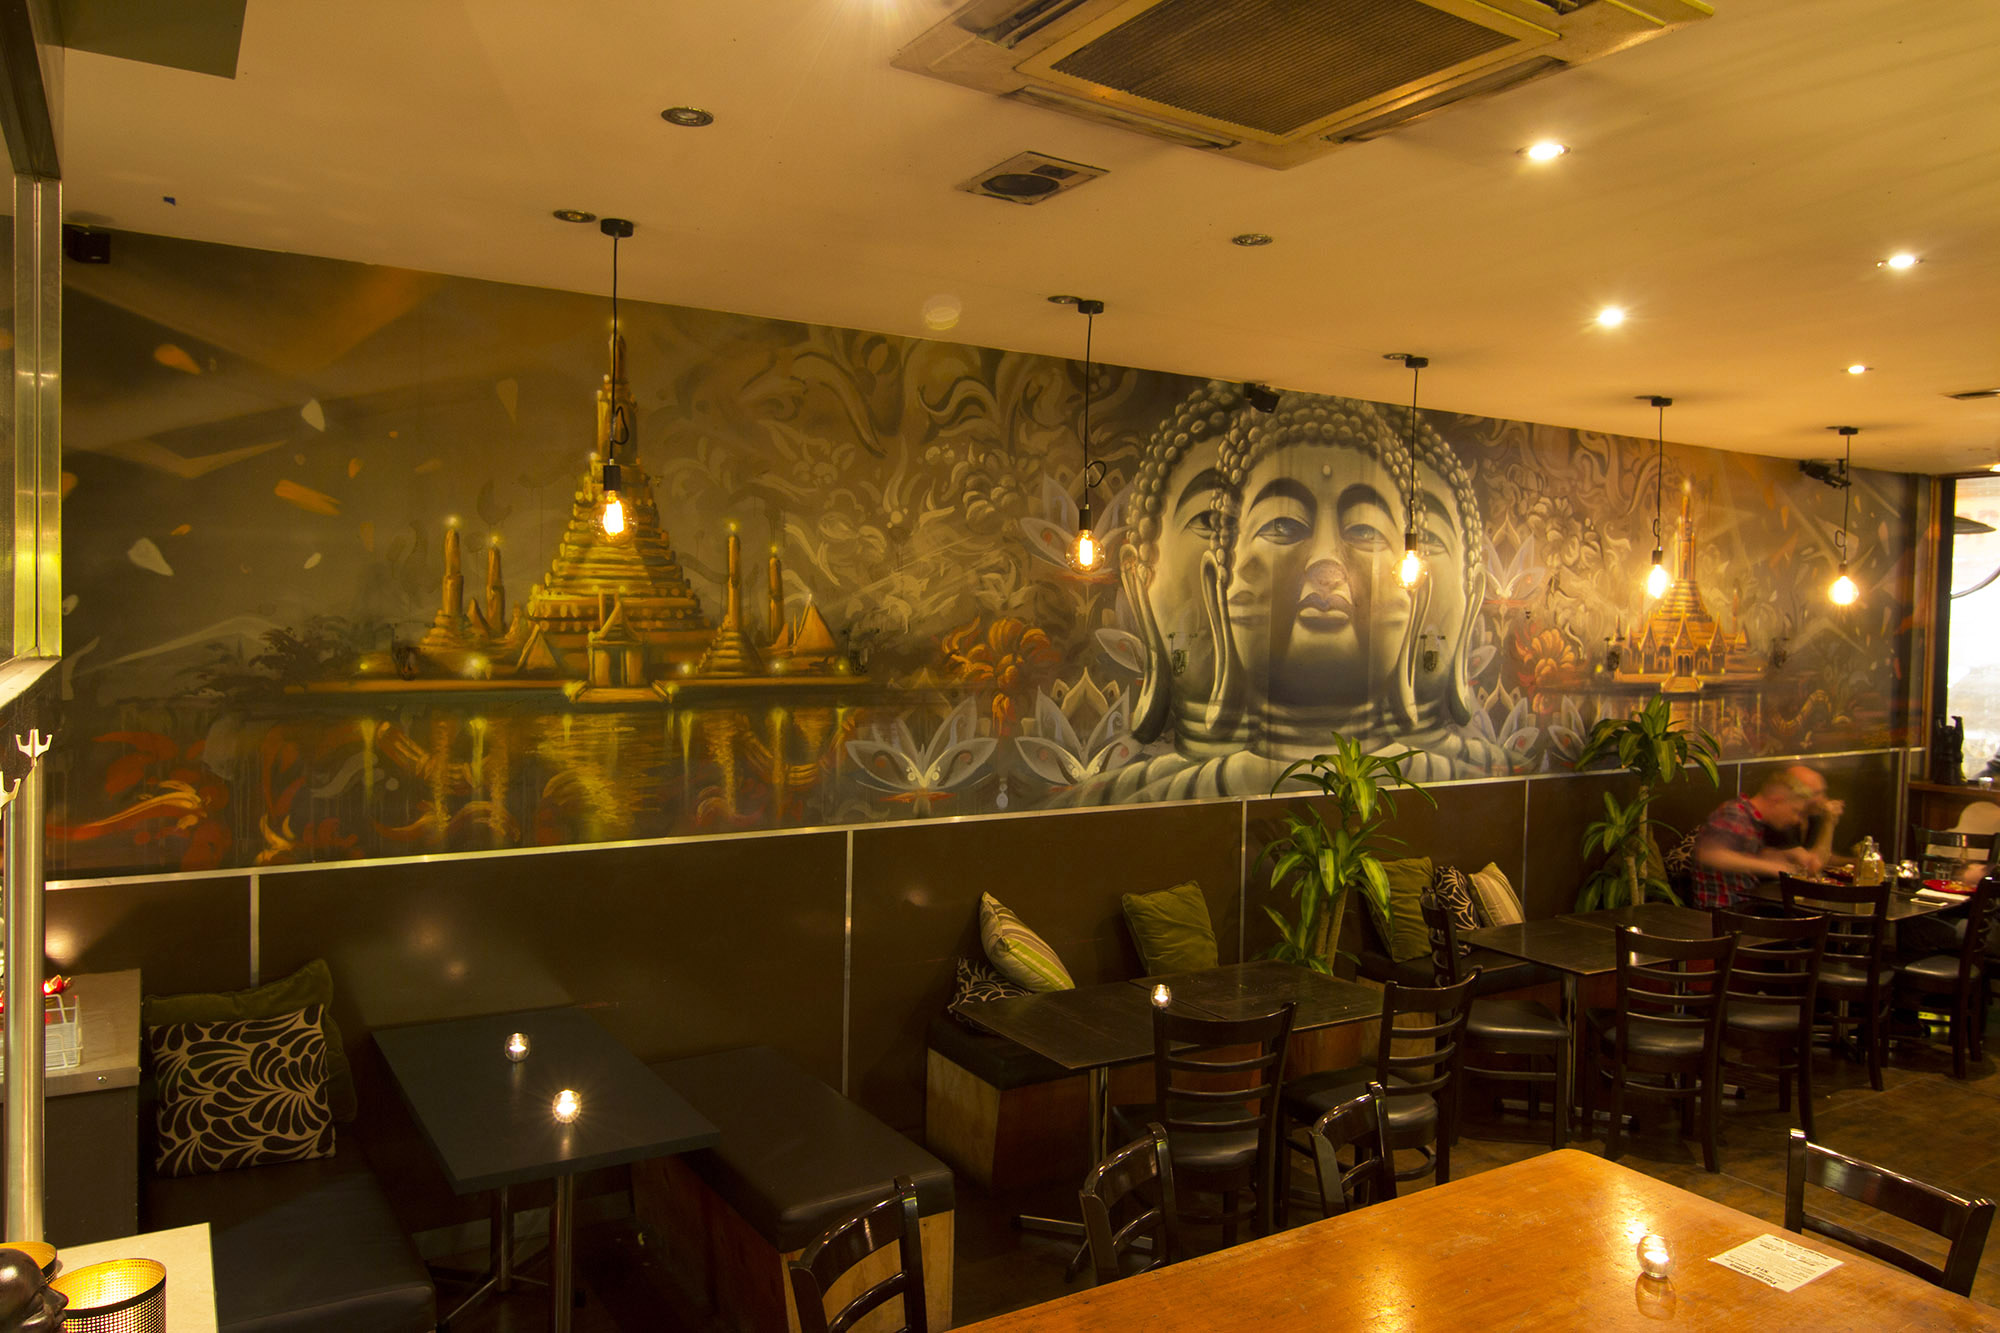 Buddhist themed graffiti in a restaurant